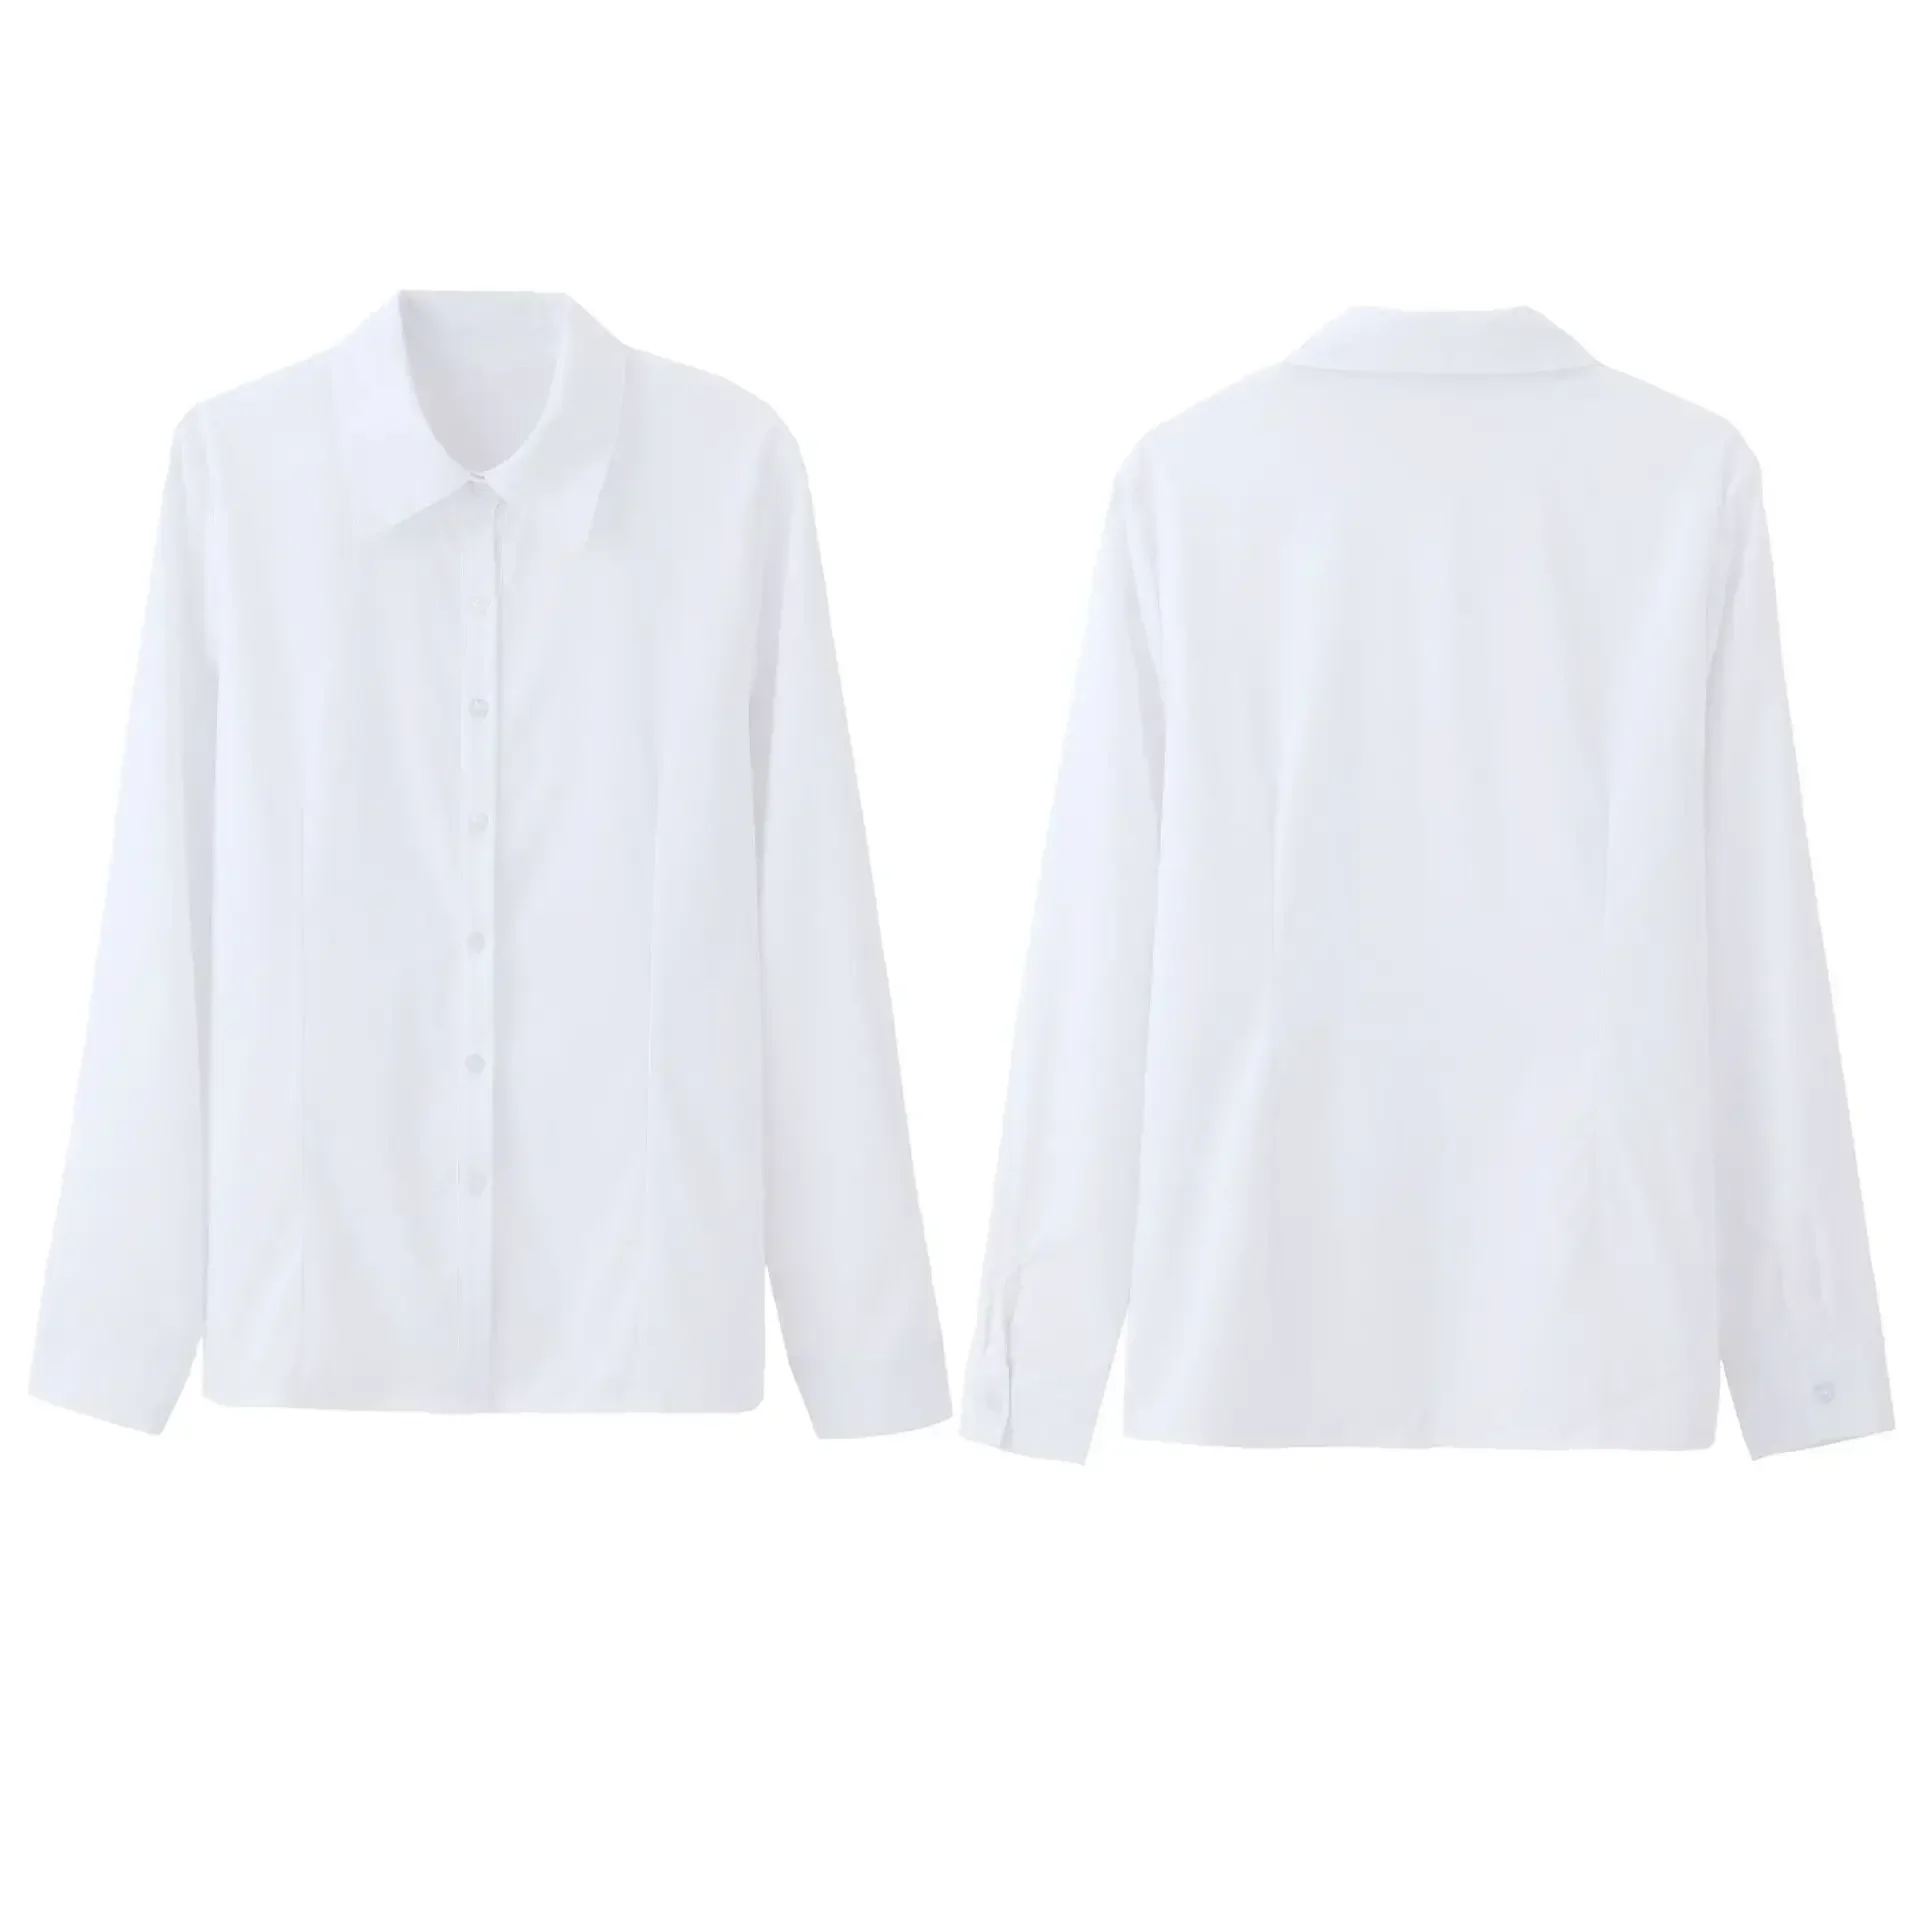 White Shirt Women Fashion Business Shirts Office Lady Long Sleeve Blouse L-6XL Women Clothing Button Shirt Plus Size Ladies Tops